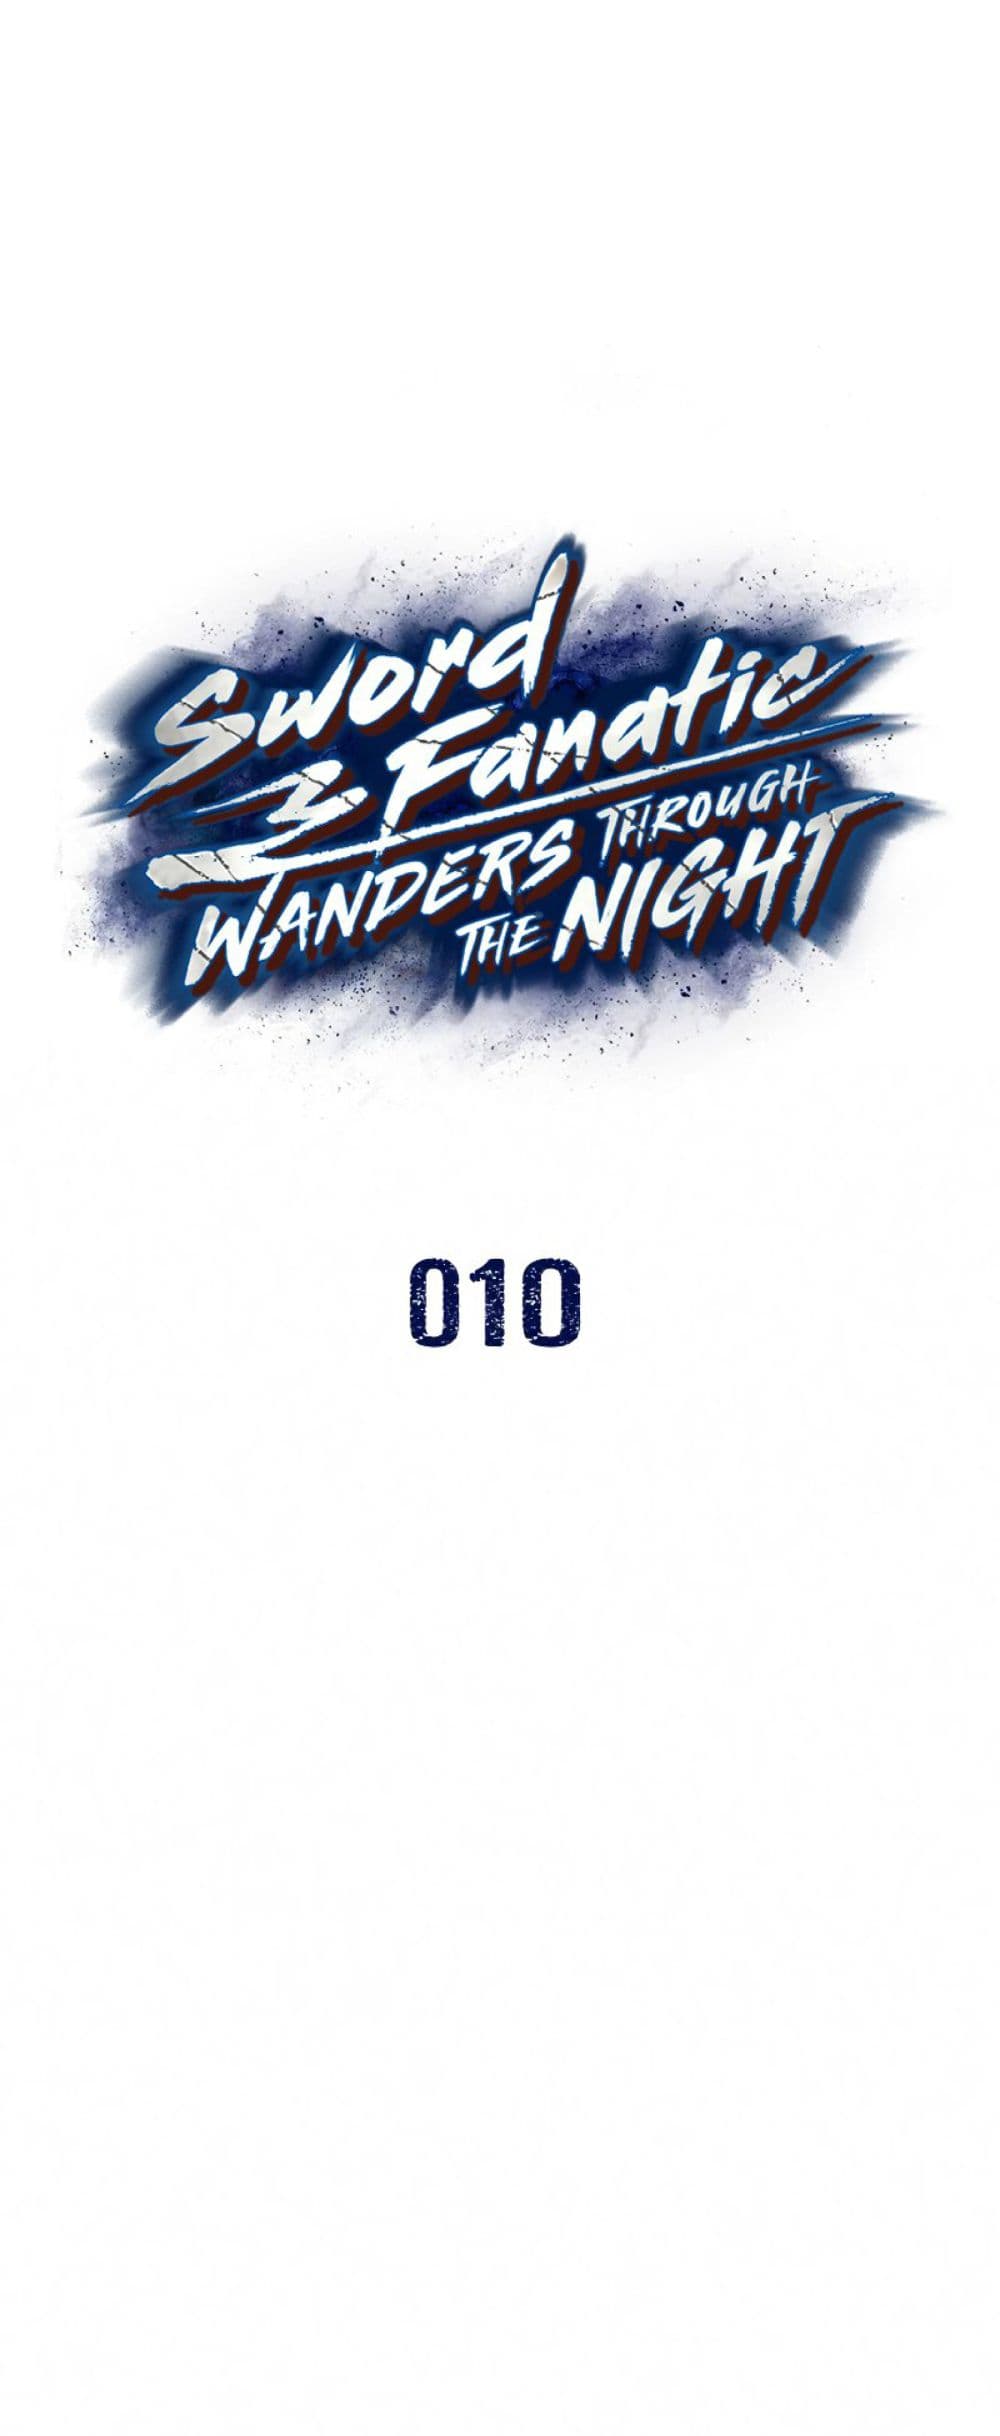 Sword Fanatic Wanders Through The Night 10-10